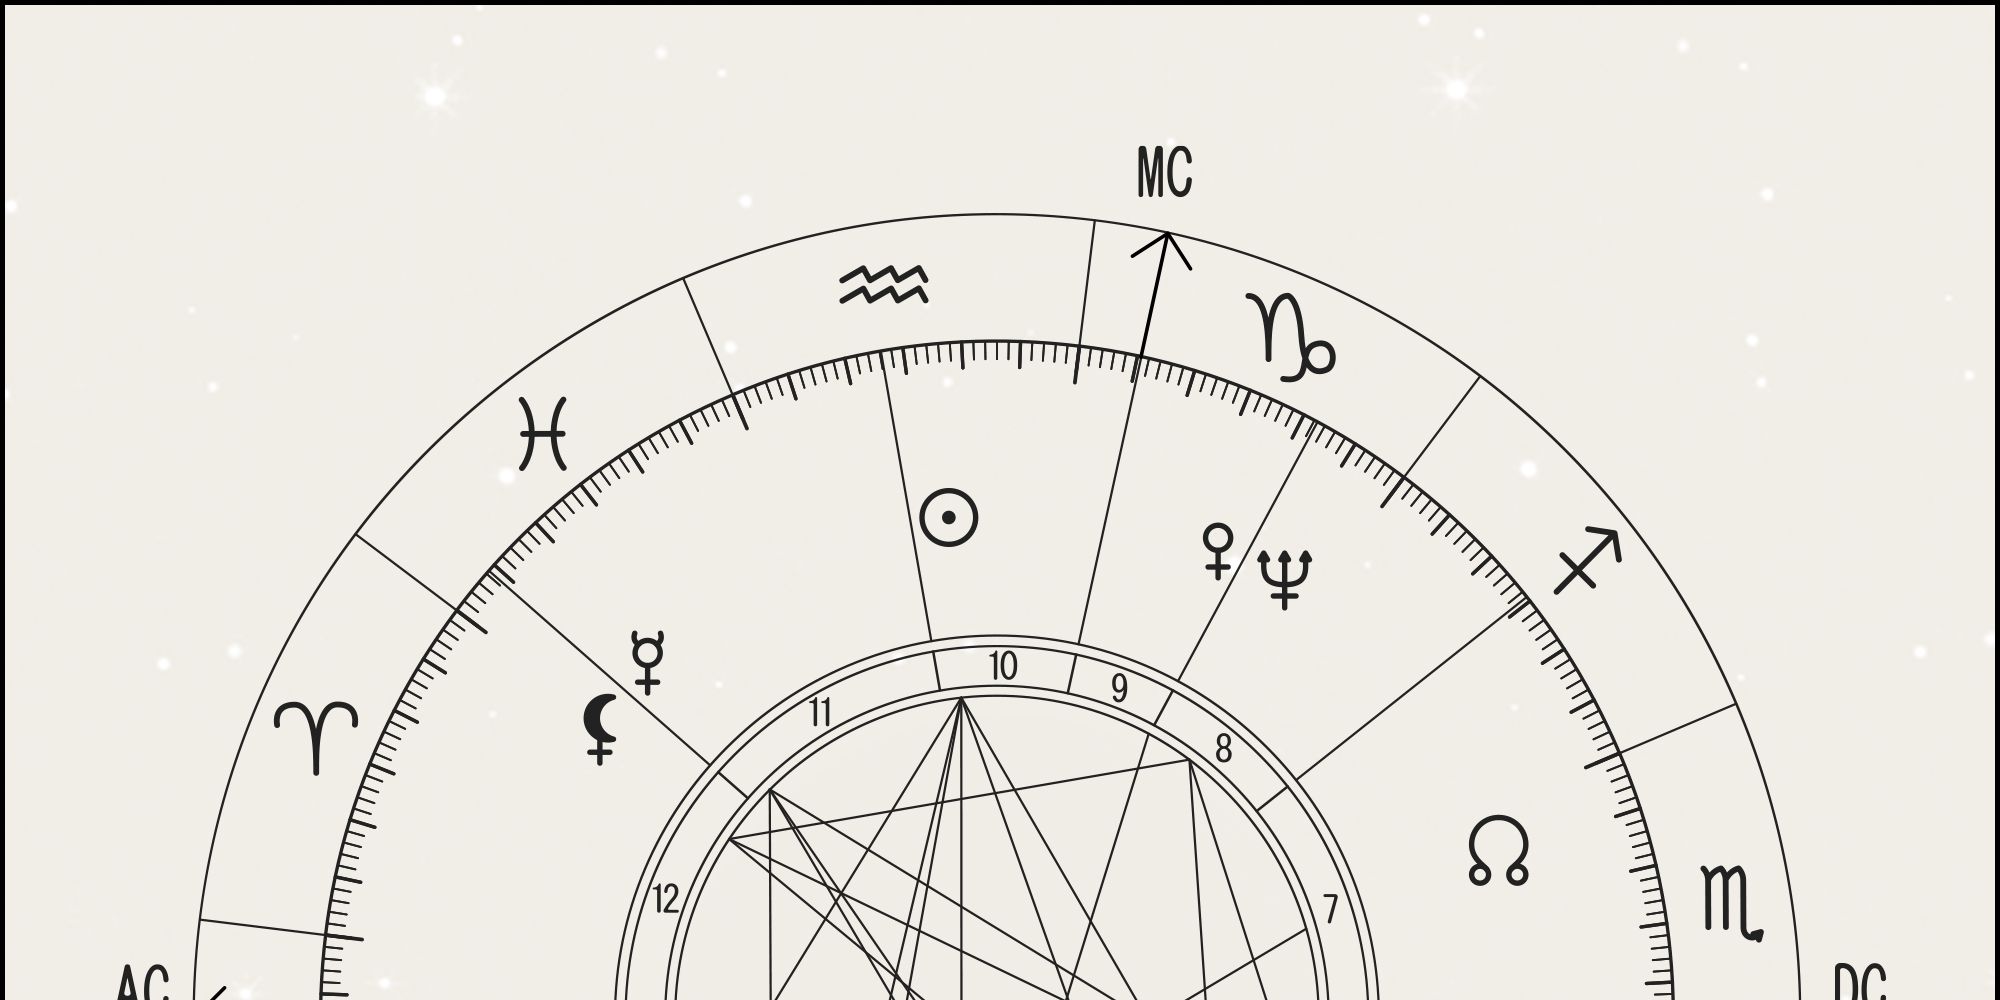 zodiac map